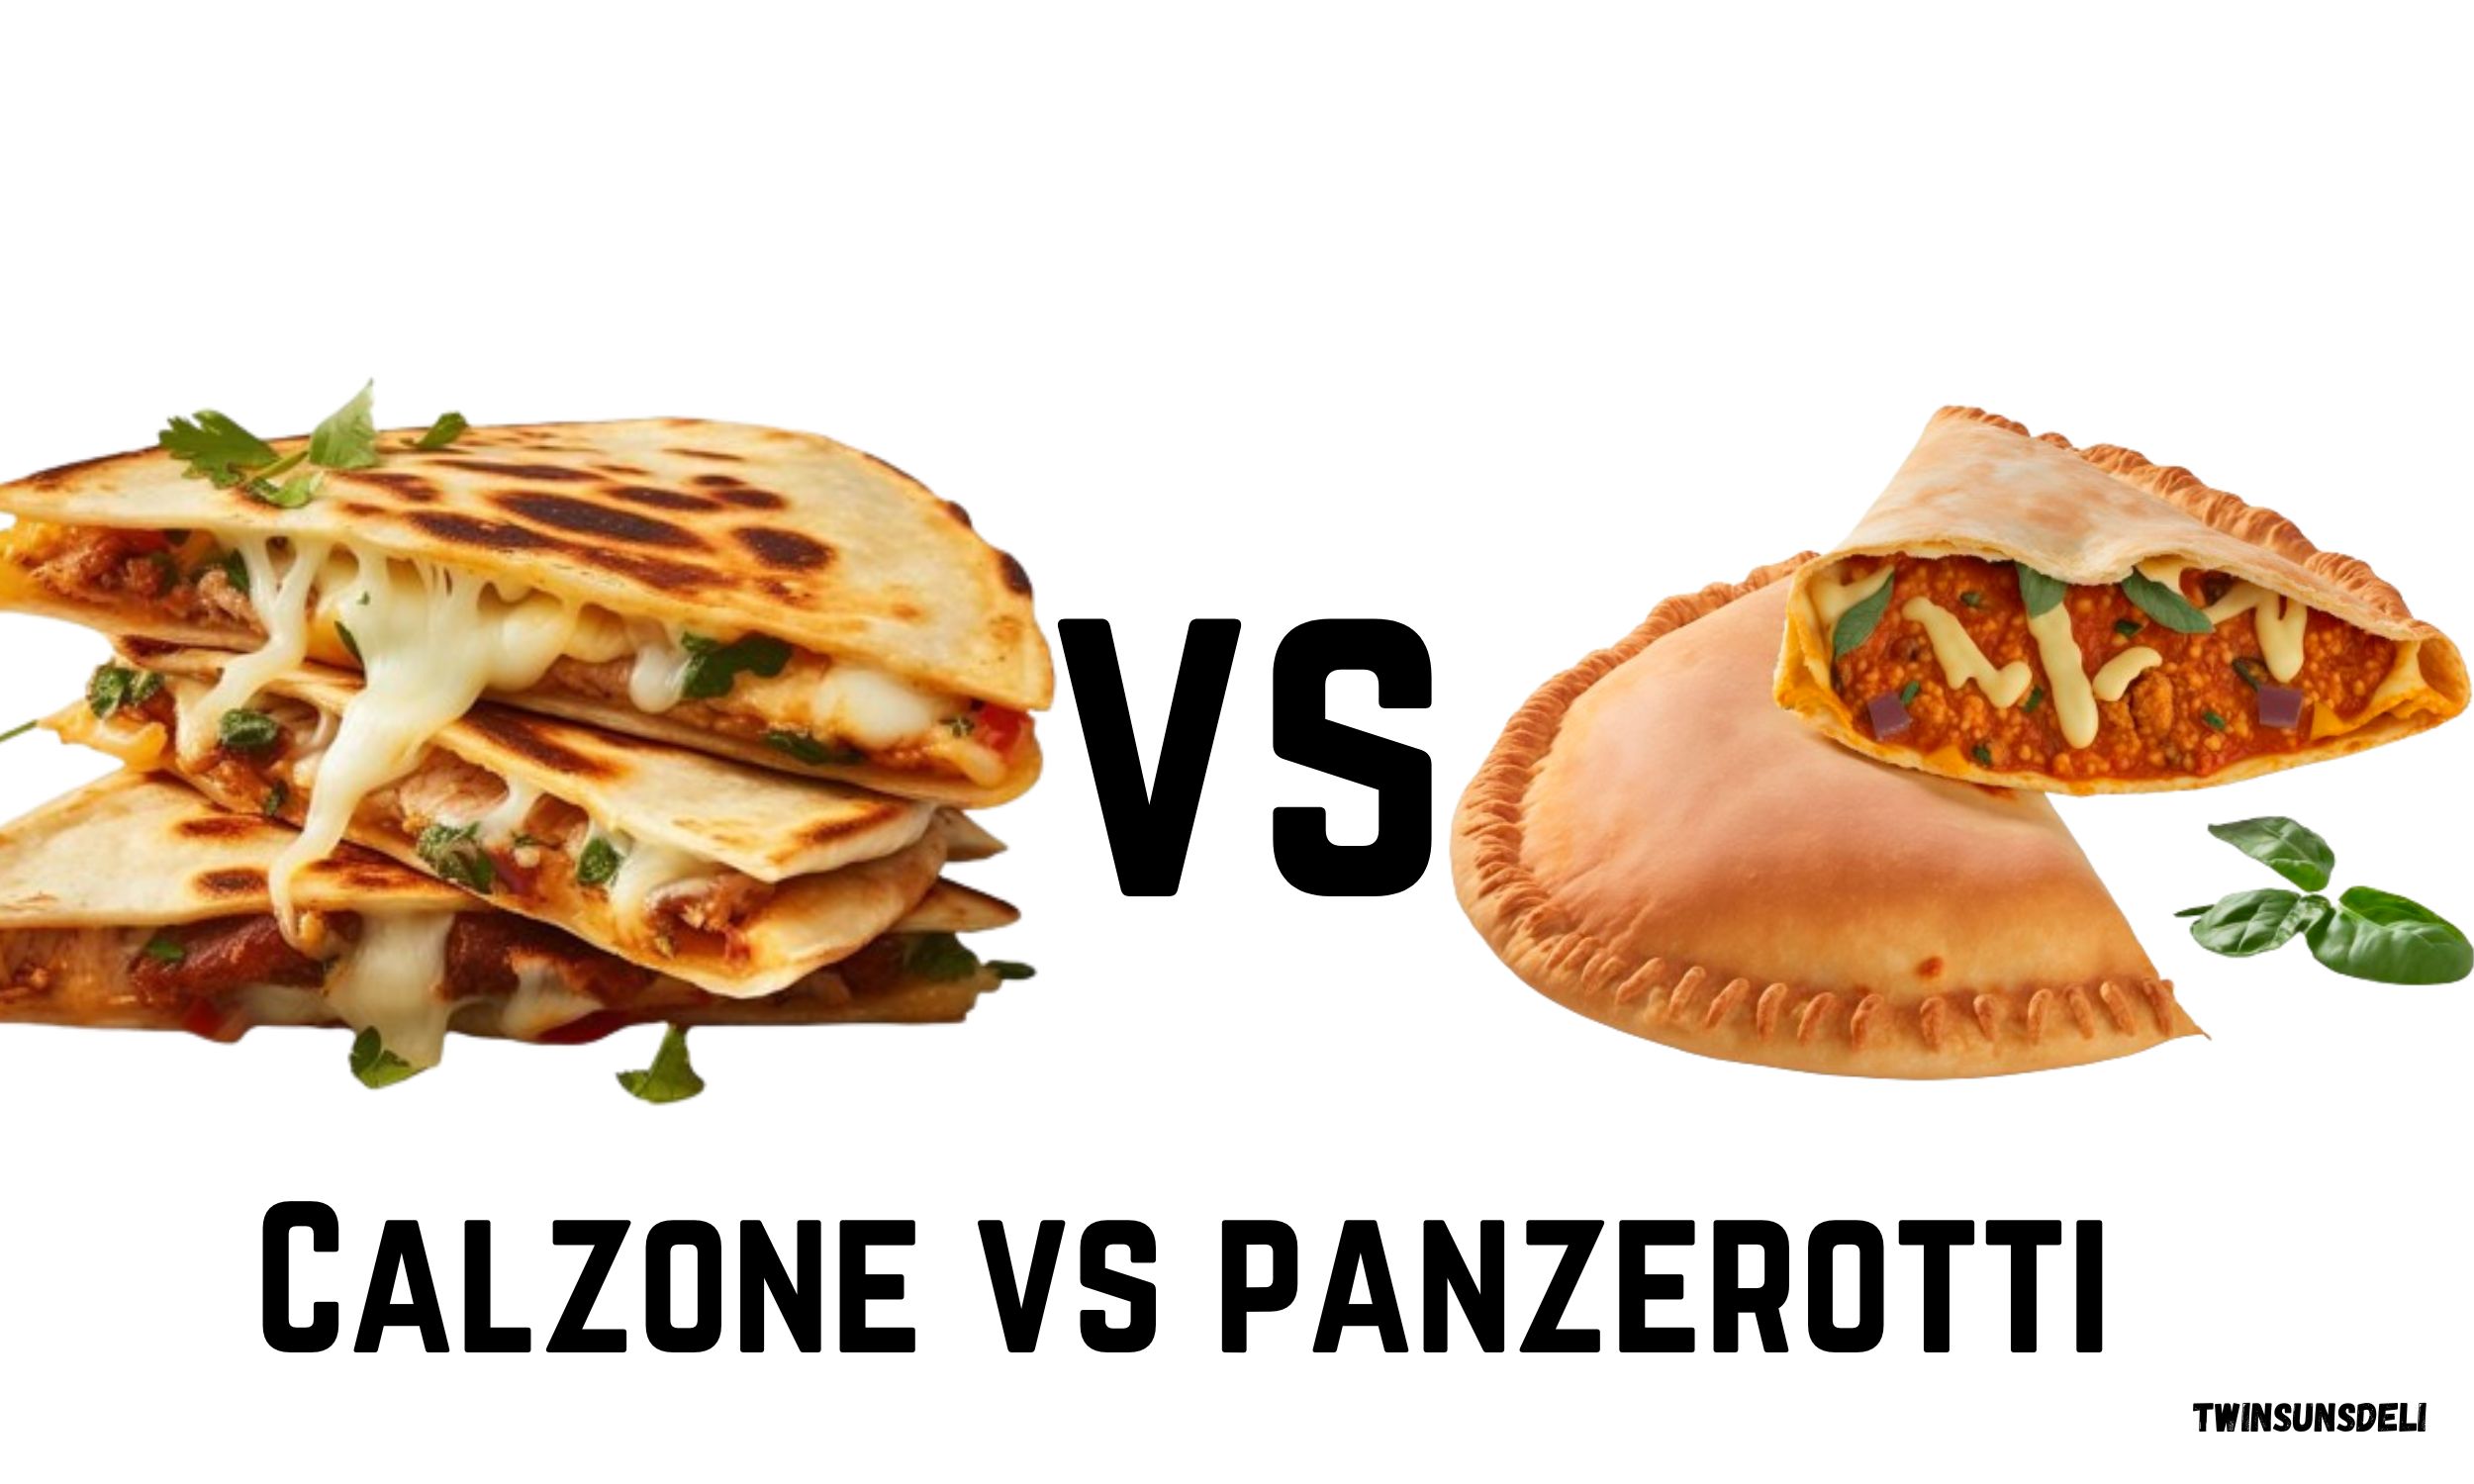 Calzone vs Panzerotti